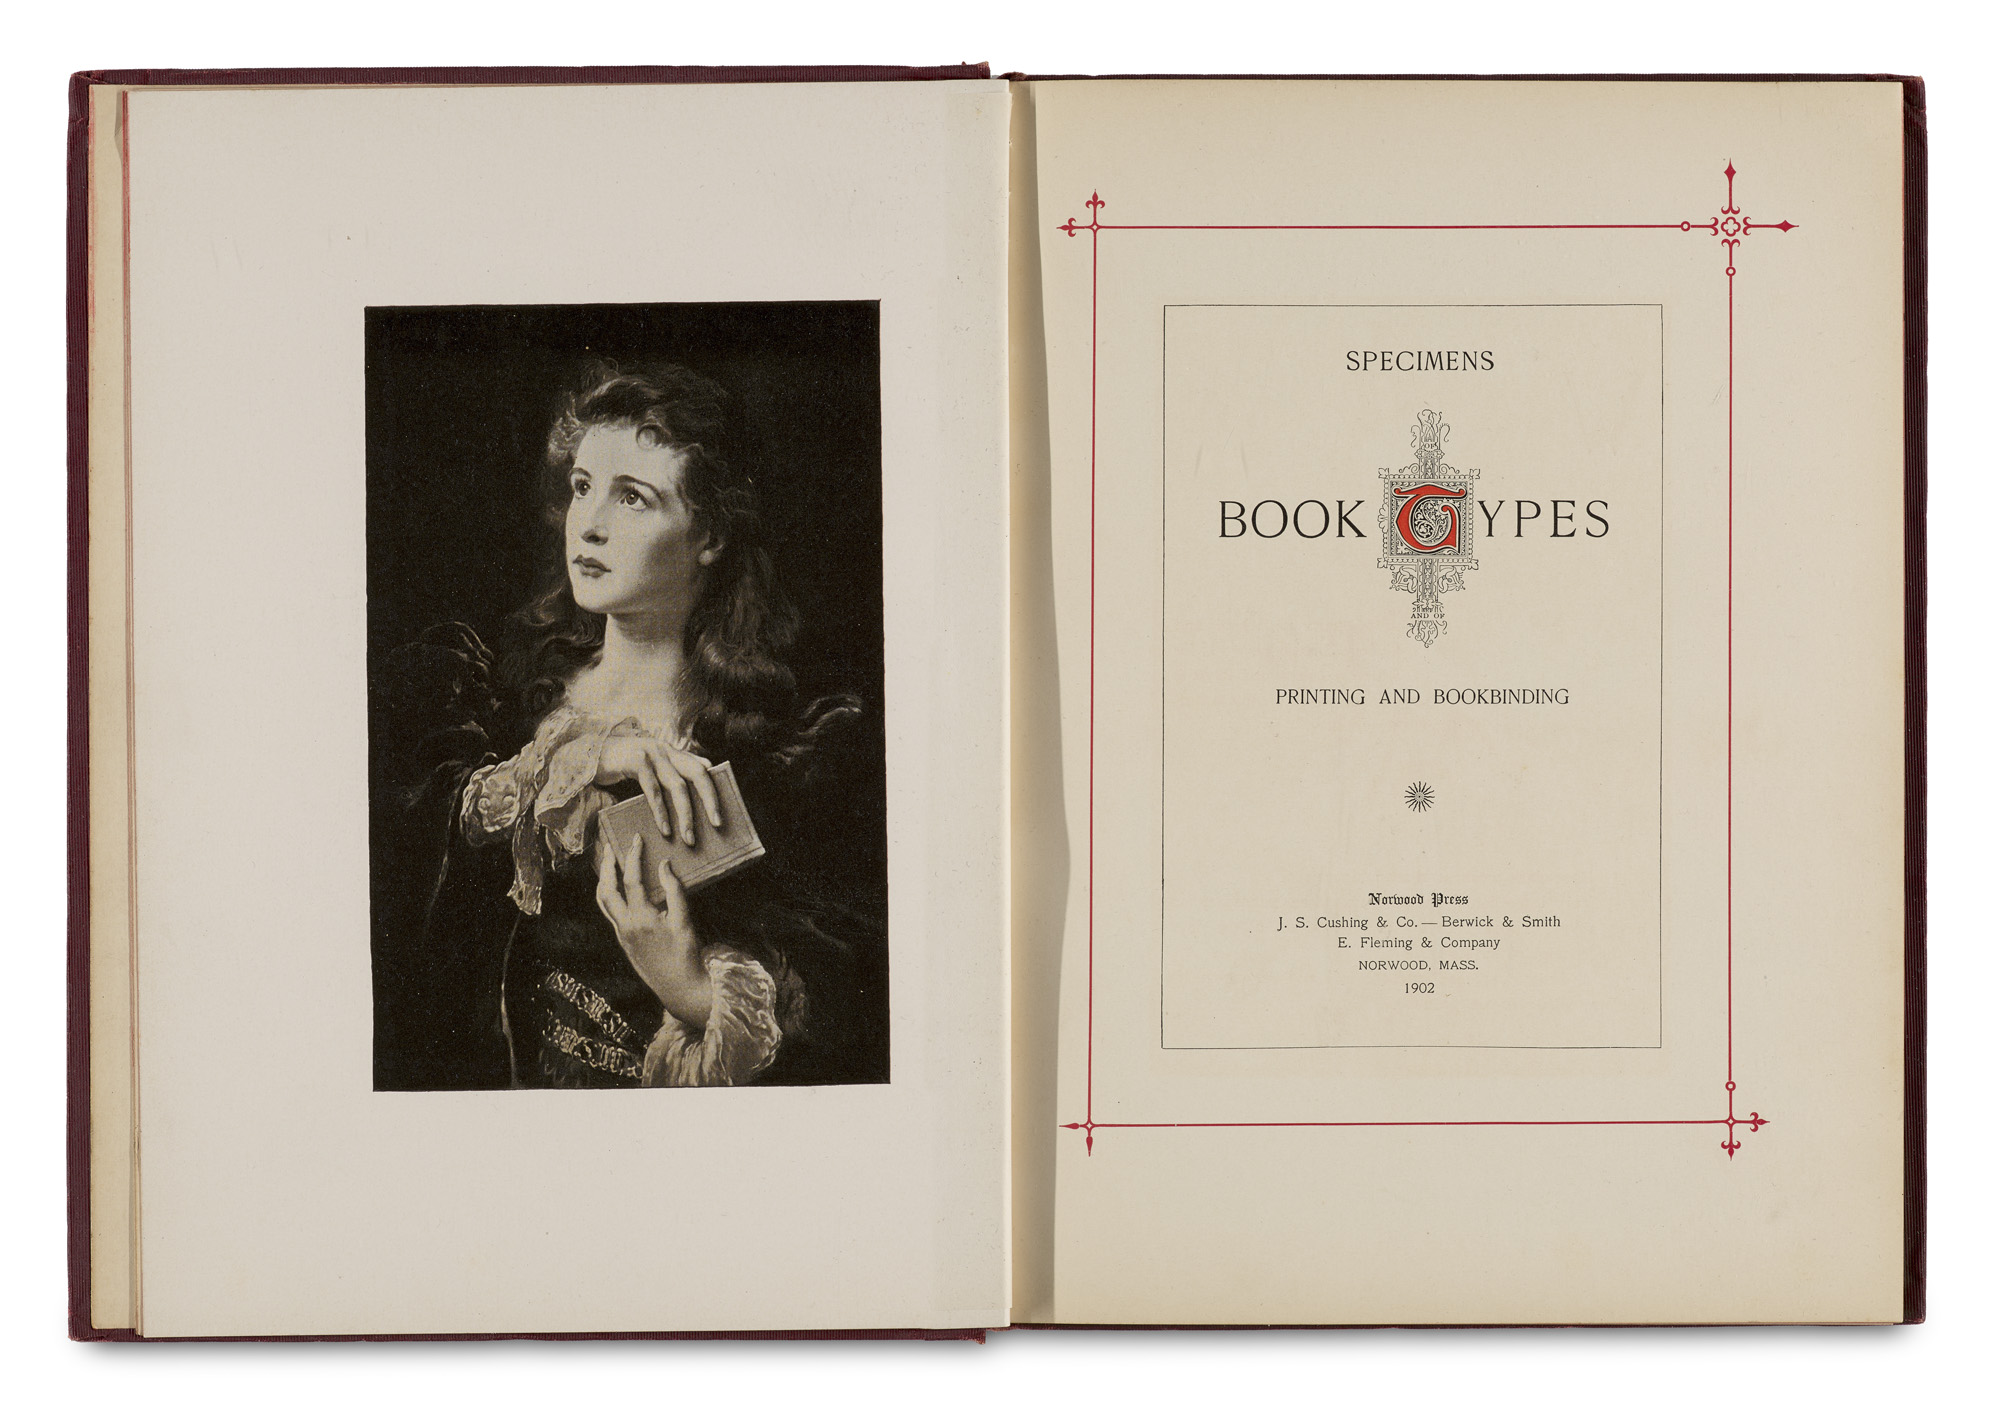 Norwood Press. Specimens of Book Types